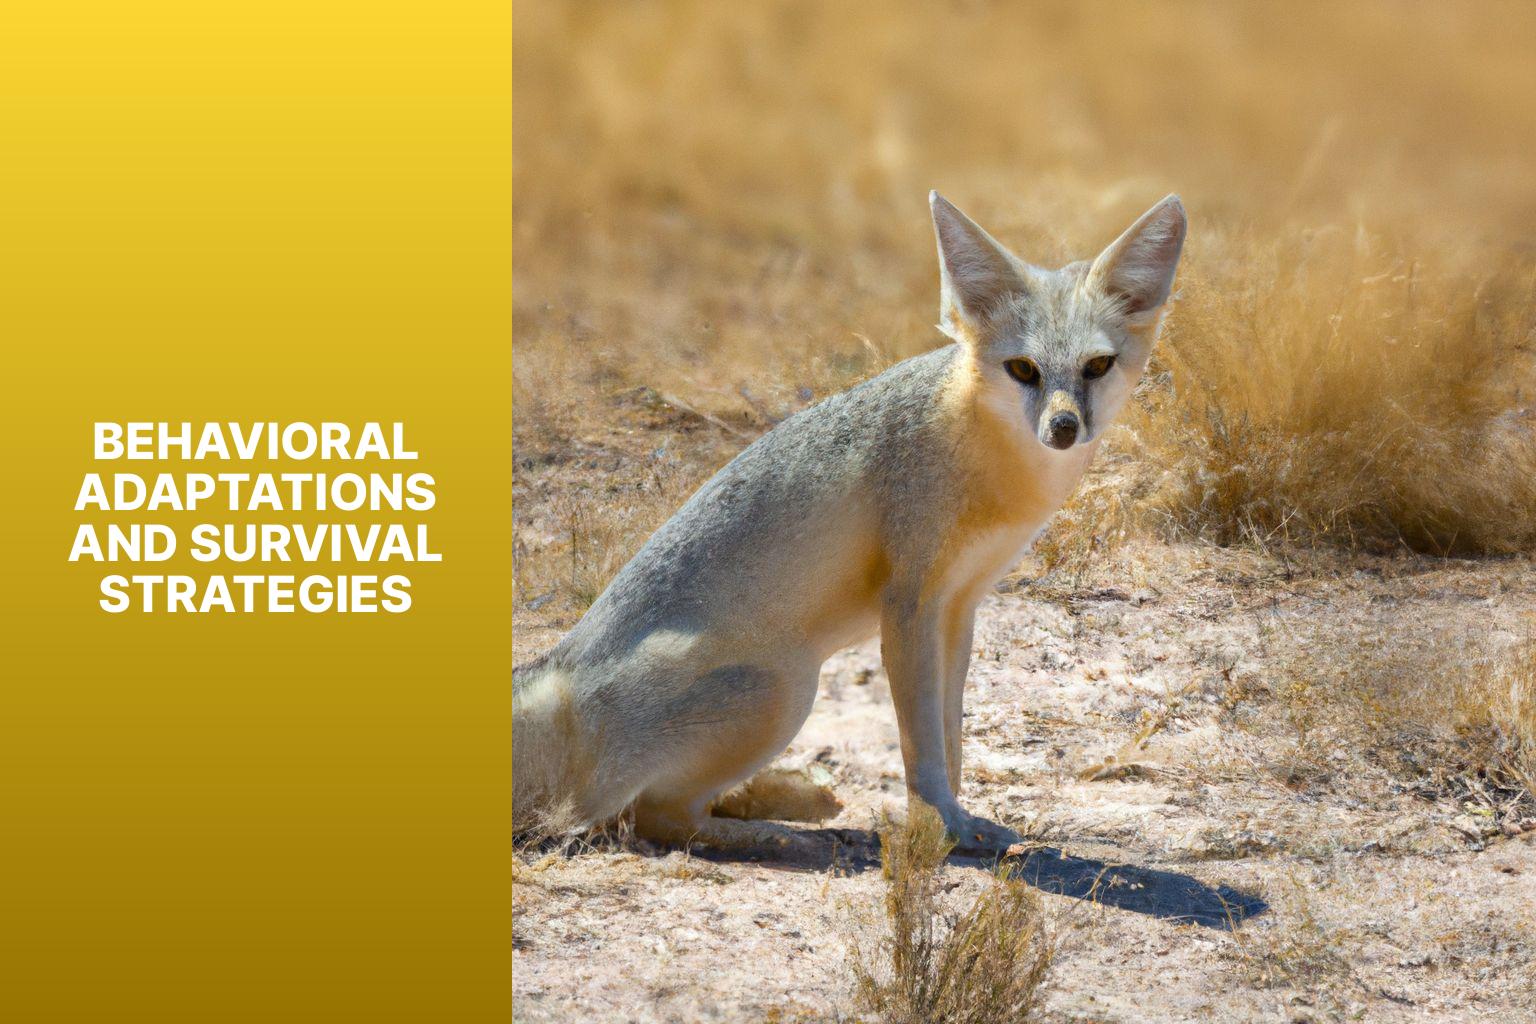 Behavioral Adaptations and Survival Strategies - Corsac Fox Behavior 